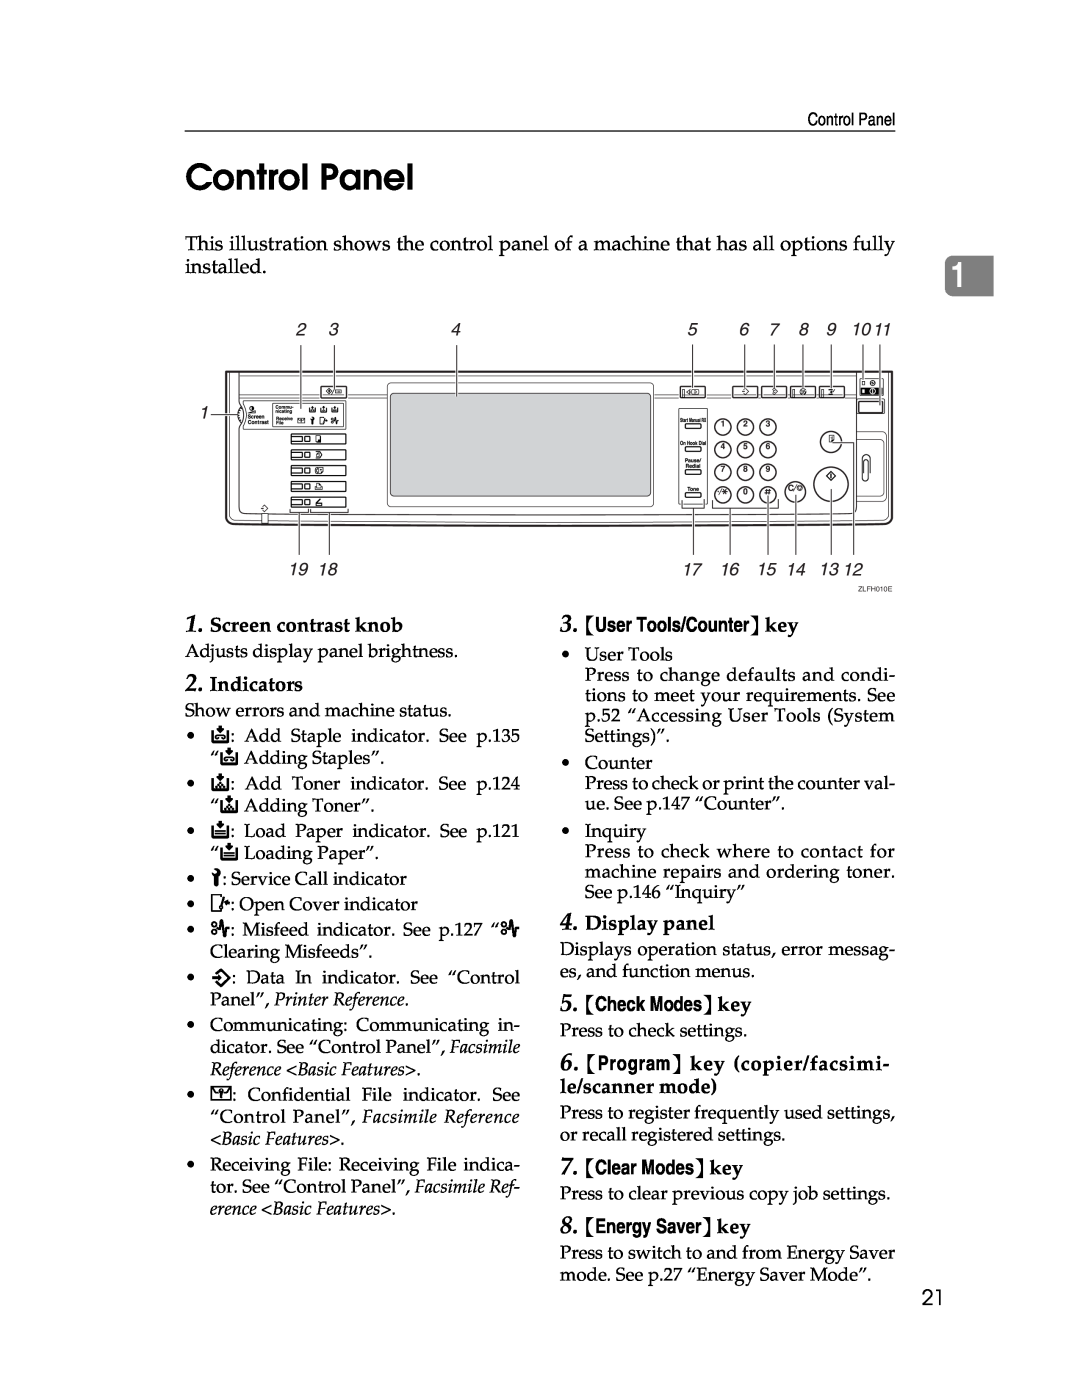 Lanier LD230, LD225 Control Panel, Screen contrast knob, Indicators, User Tools/Counterkey, Display panel, Check Modeskey 